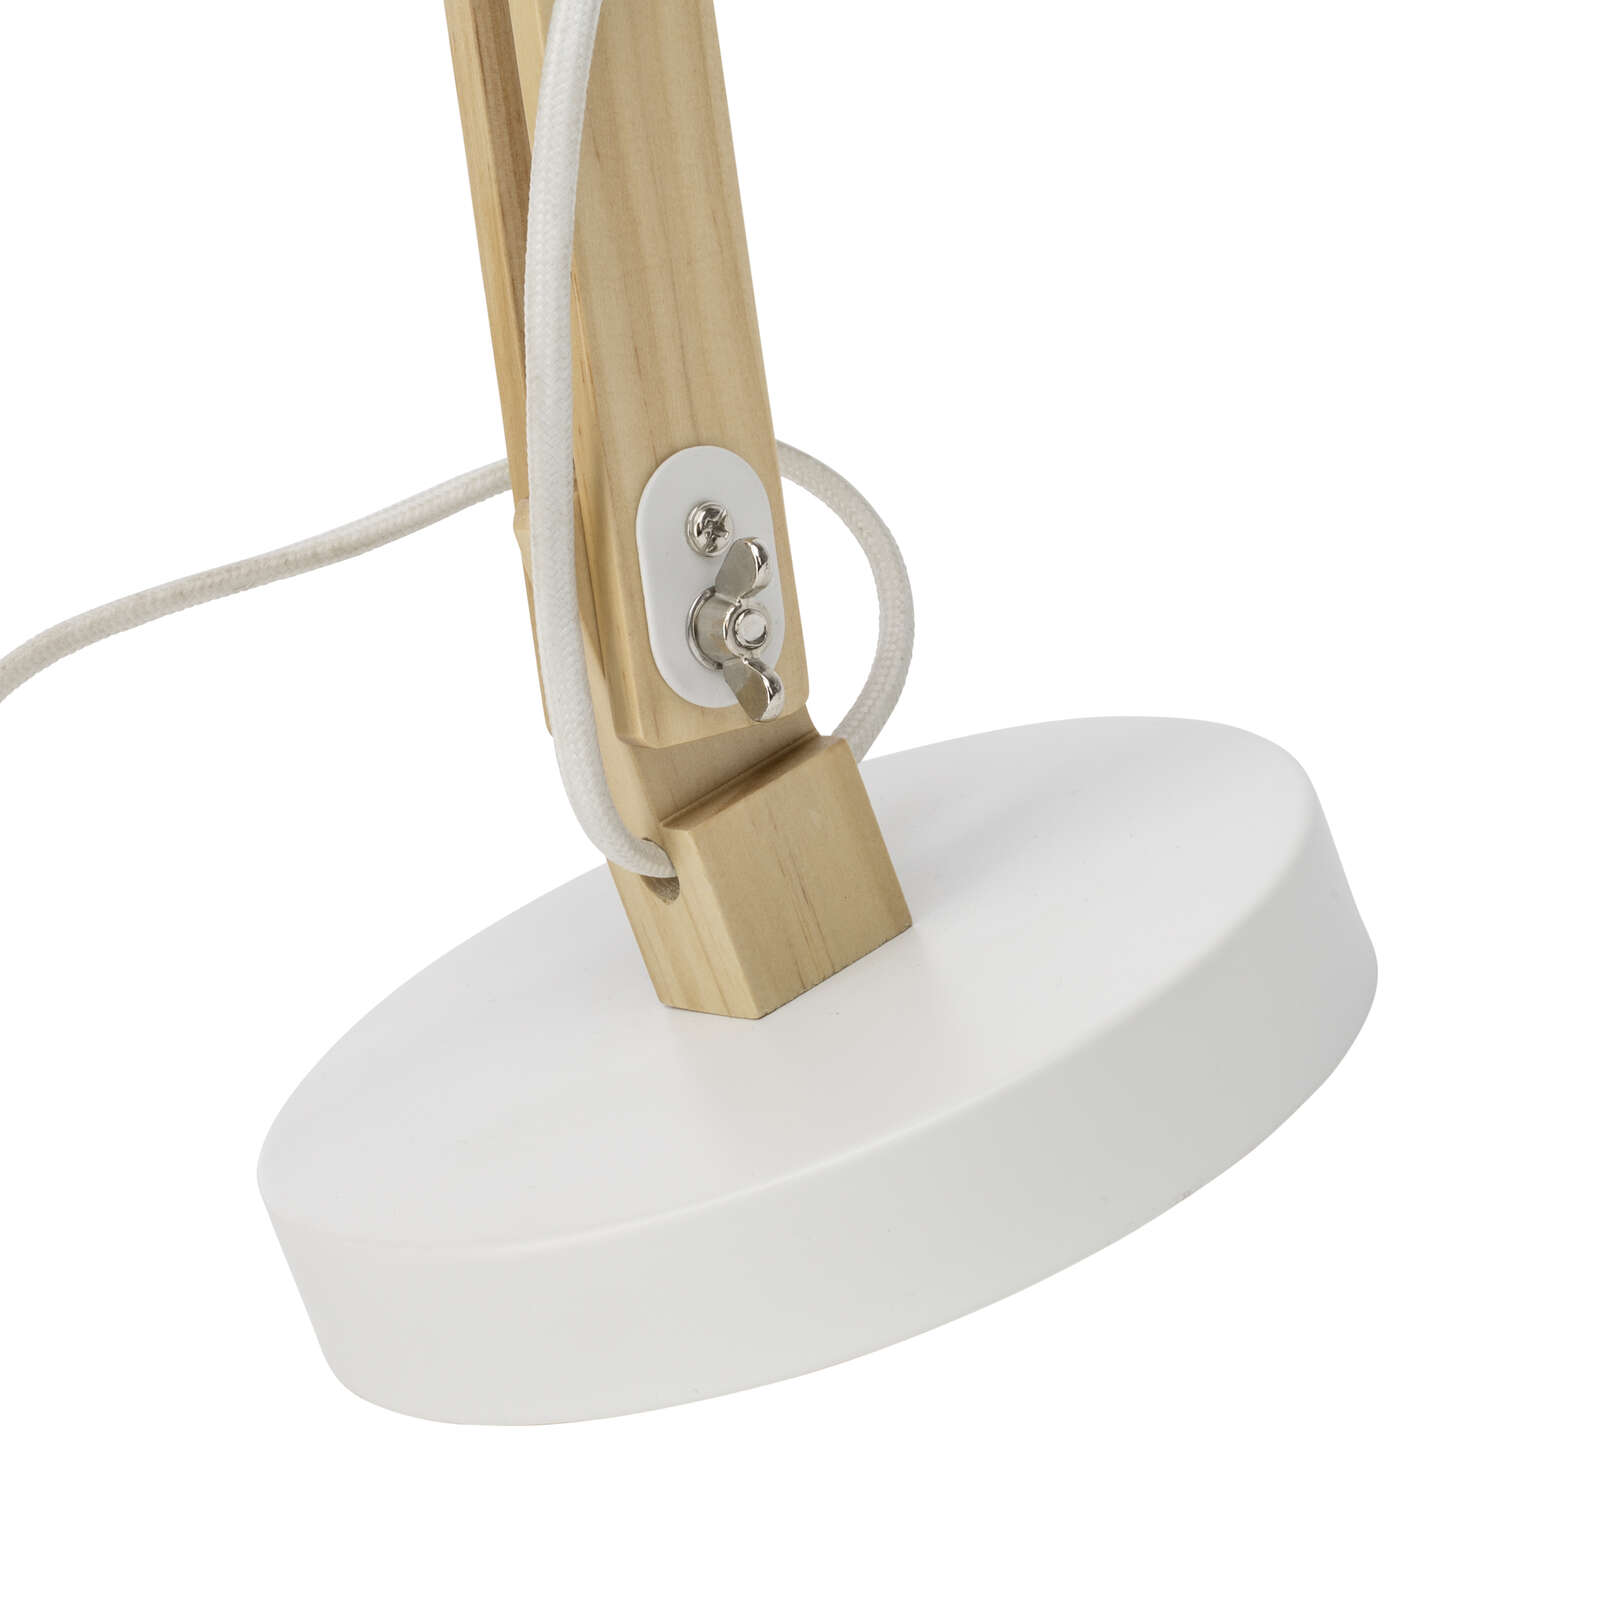             Lámpara de mesa de madera - Lisa 1 - Blanco
        